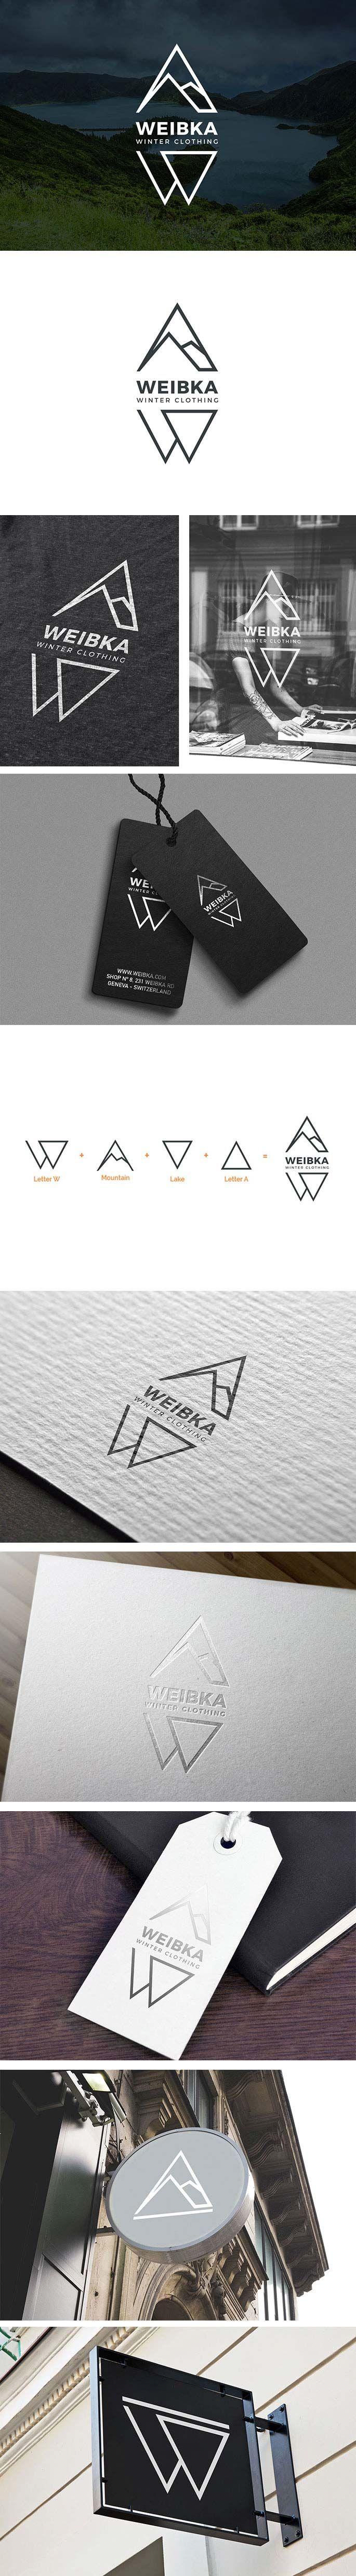 Triangle Clothing Brand Logo - Logo Design Fashion, Clothing & Sport Brand Identity. Letter W